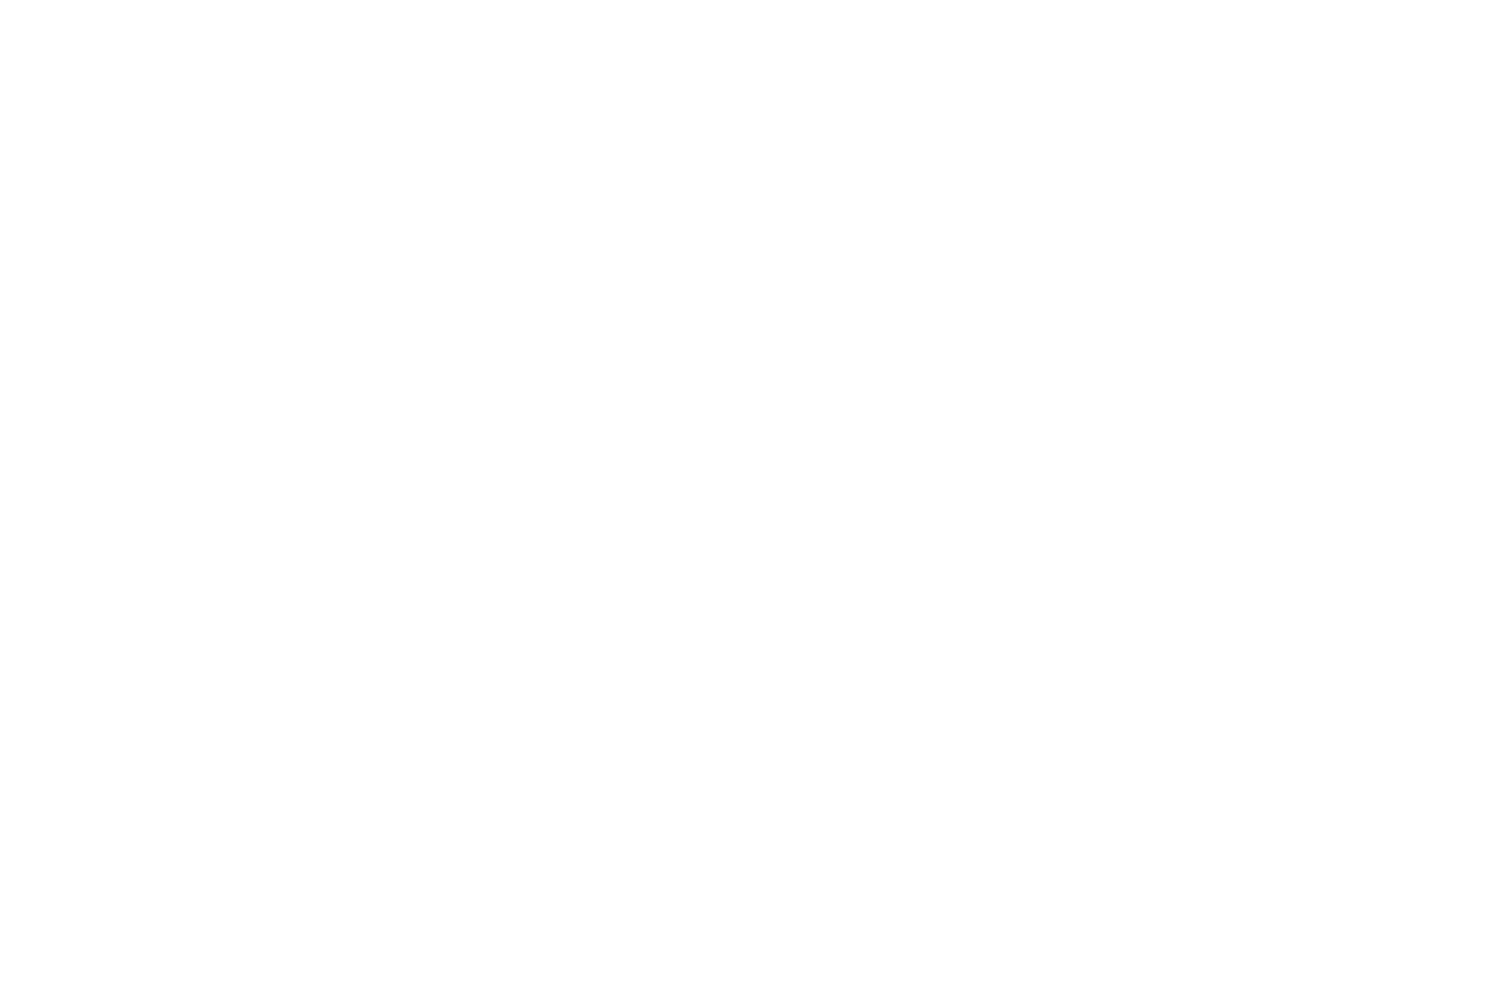 Cordell Hull Photography